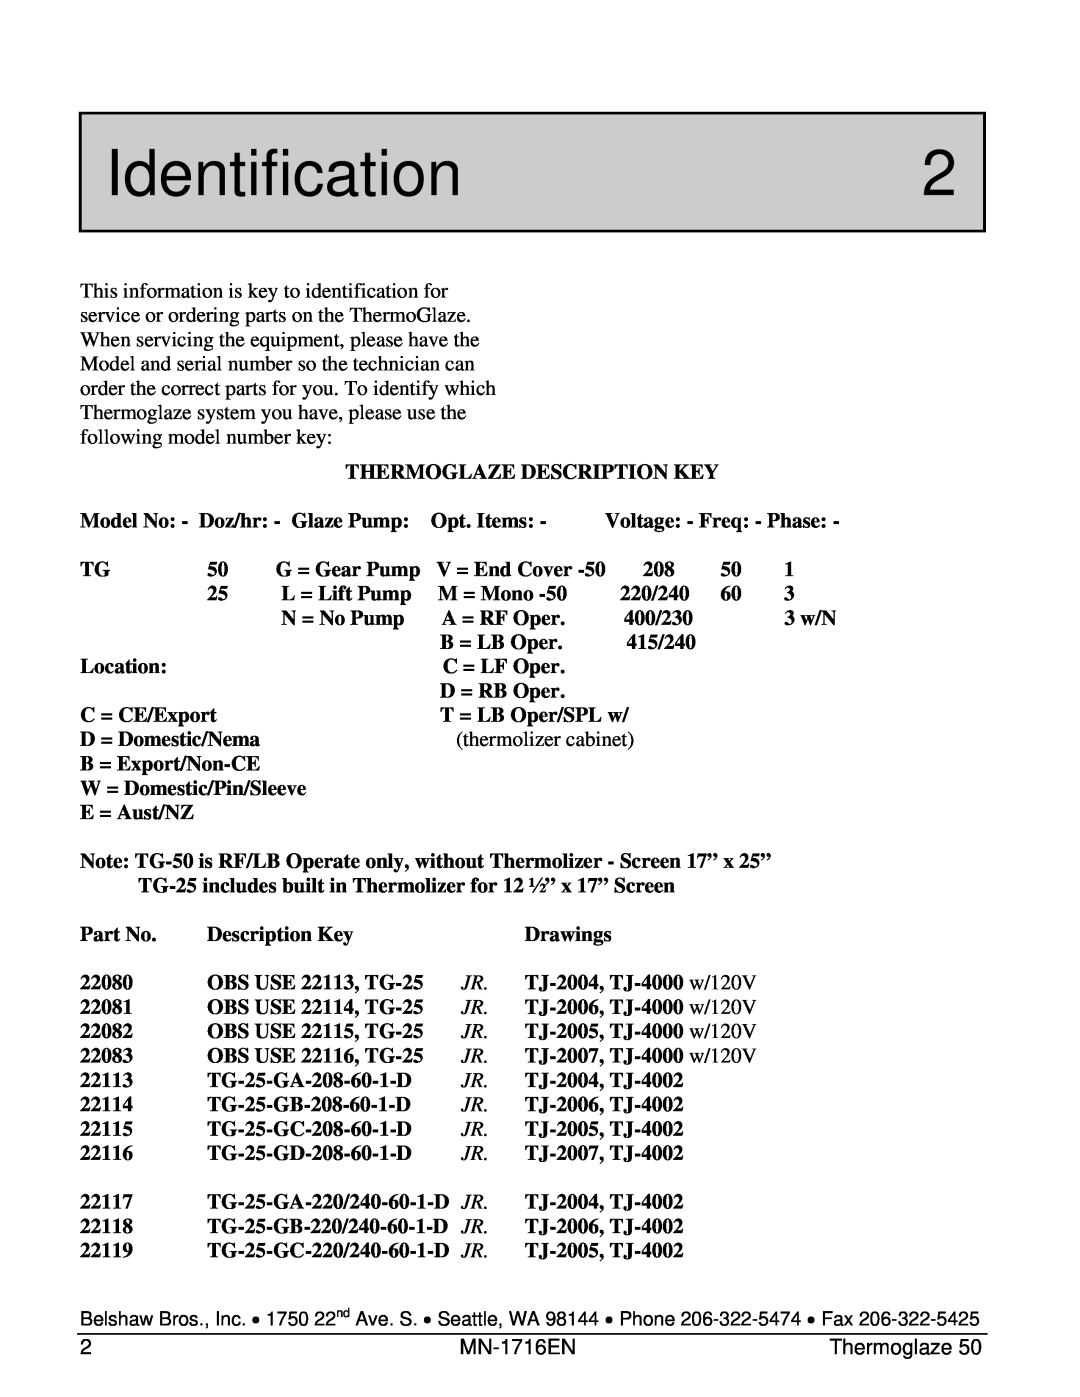 Belshaw Brothers TG 50 manual Identification2, MN-1716EN, Thermoglaze 